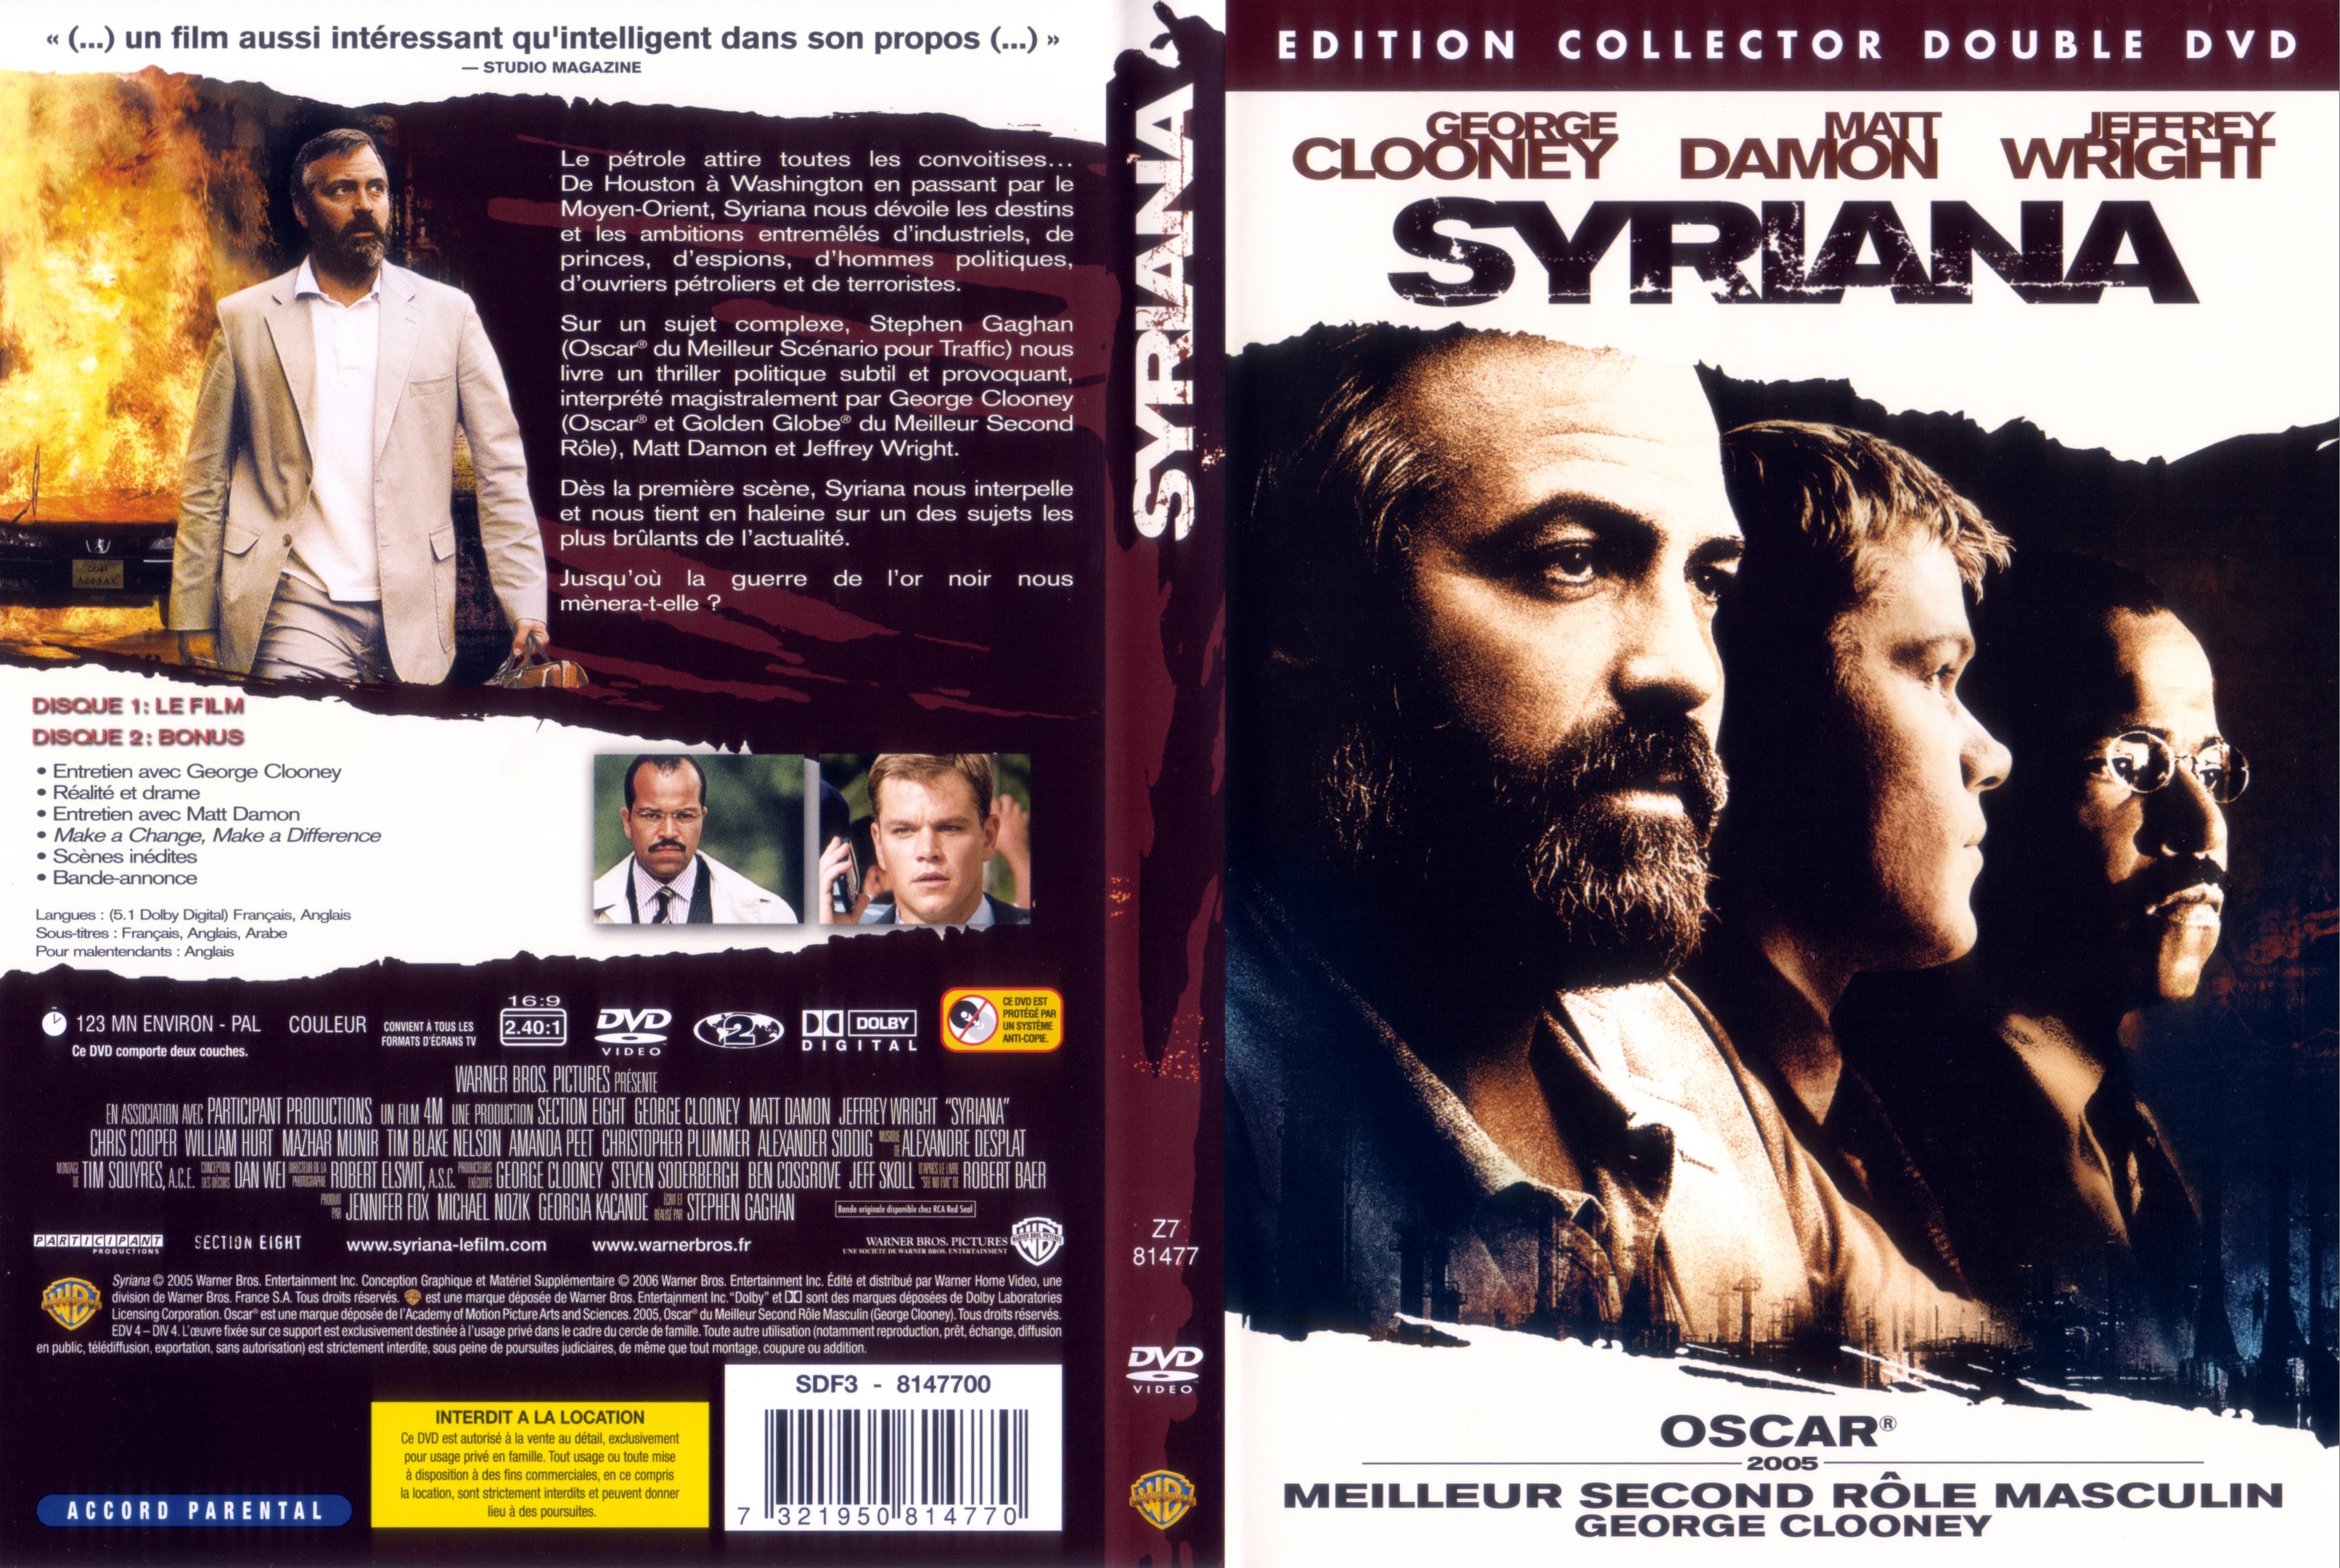 Jaquette DVD Syriana v2